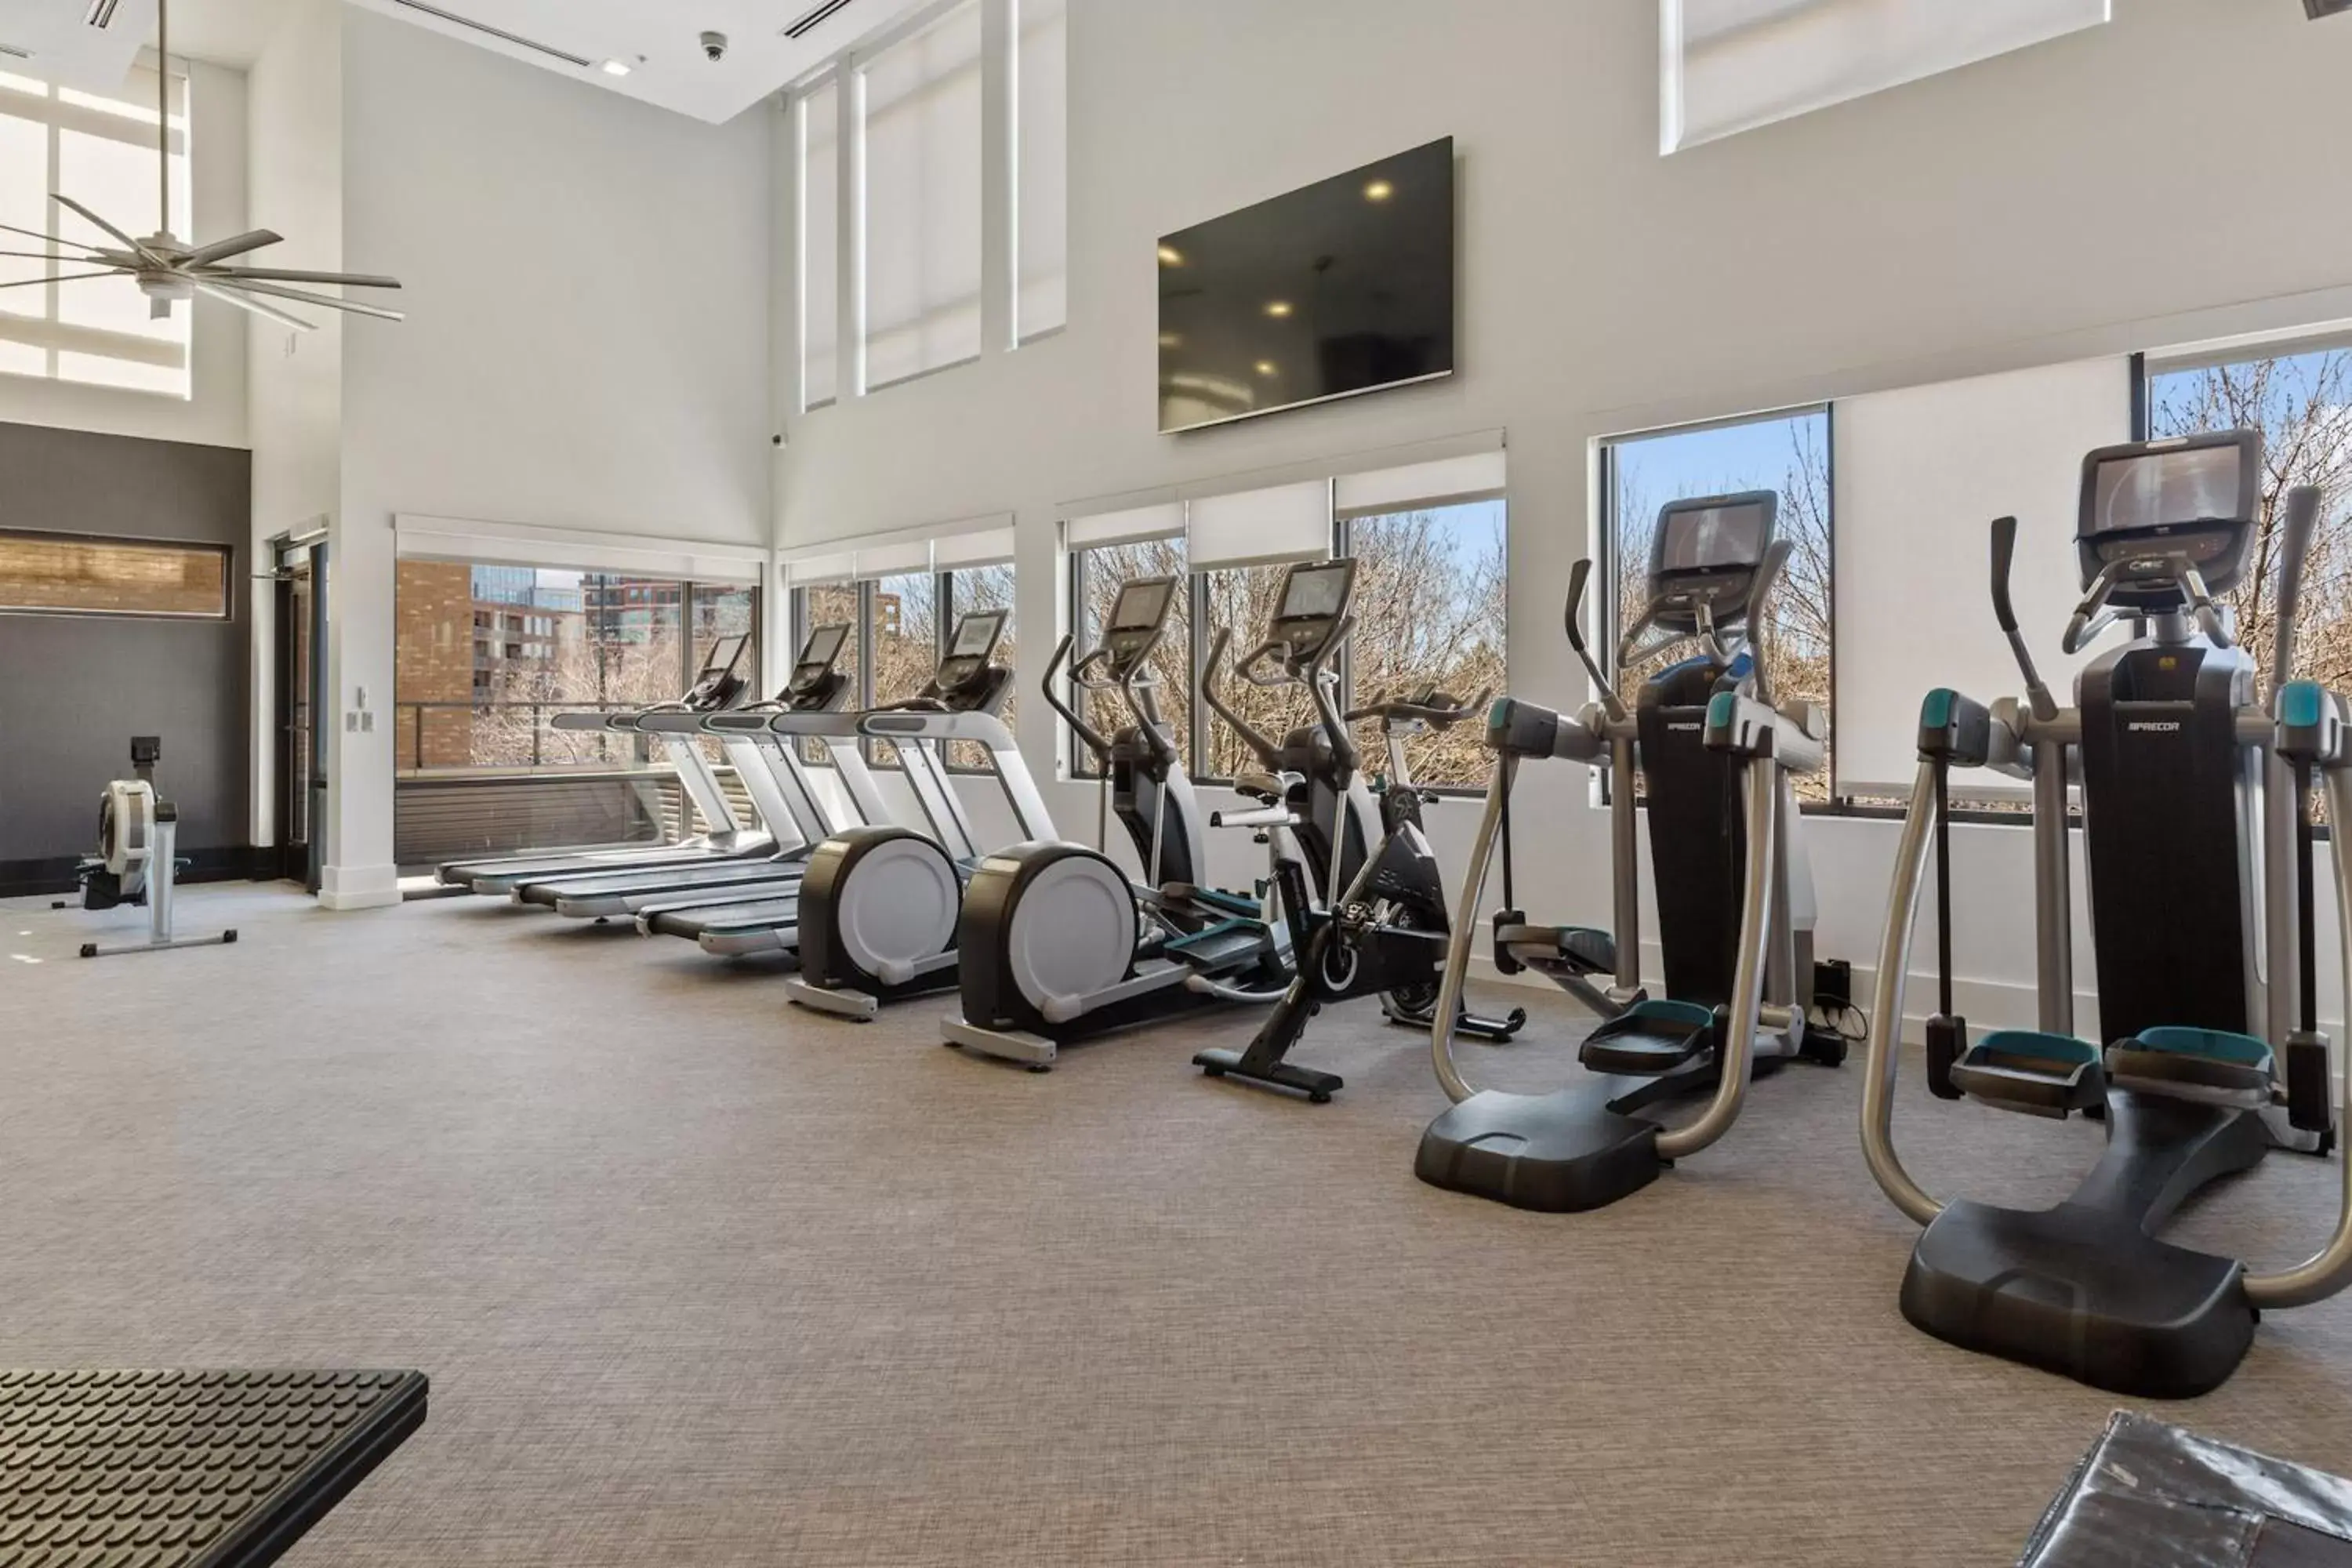 Fitness centre/facilities, Fitness Center/Facilities in Kasa Union Station Denver